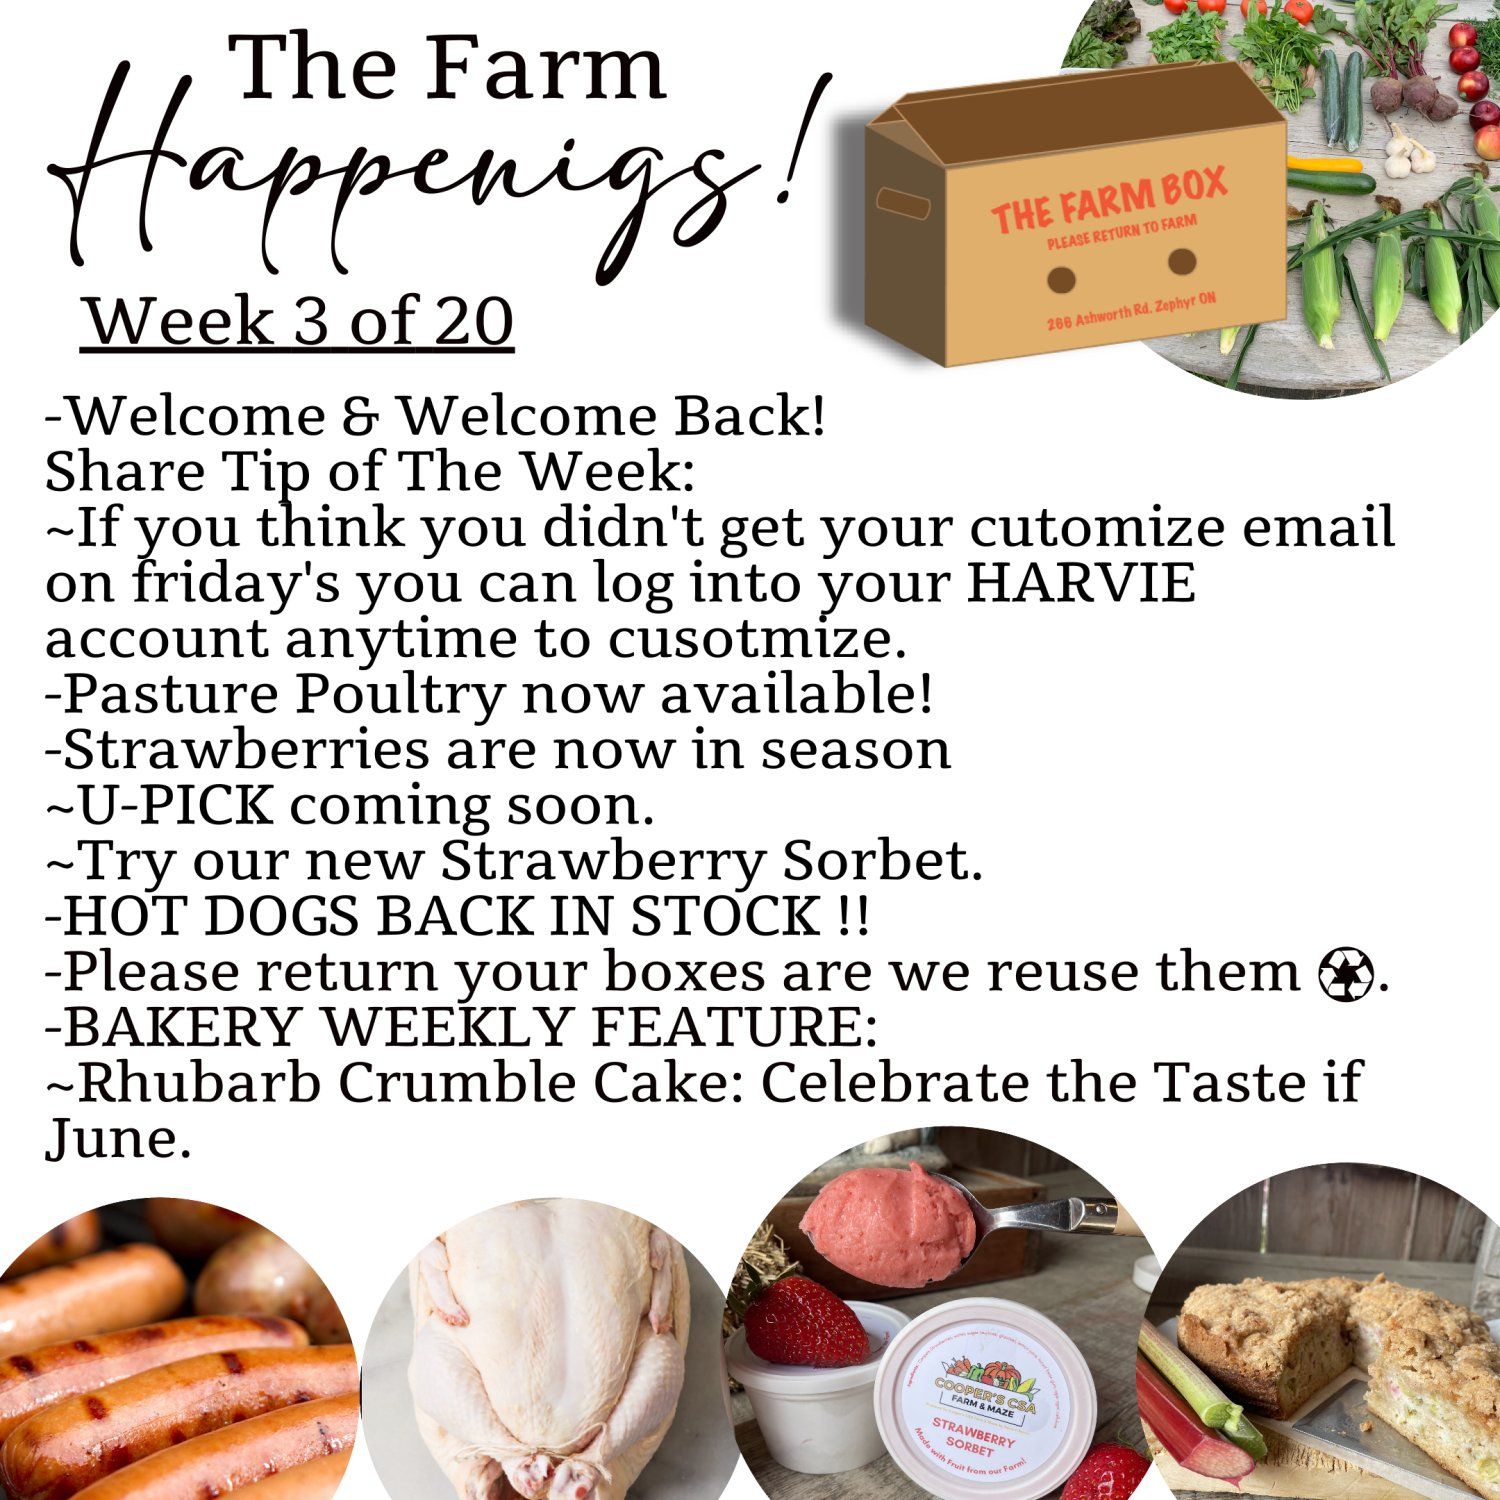 Next Happening: "The Farm Box"-Coopers CSA Farm Farm Happenings Week 3 of 20